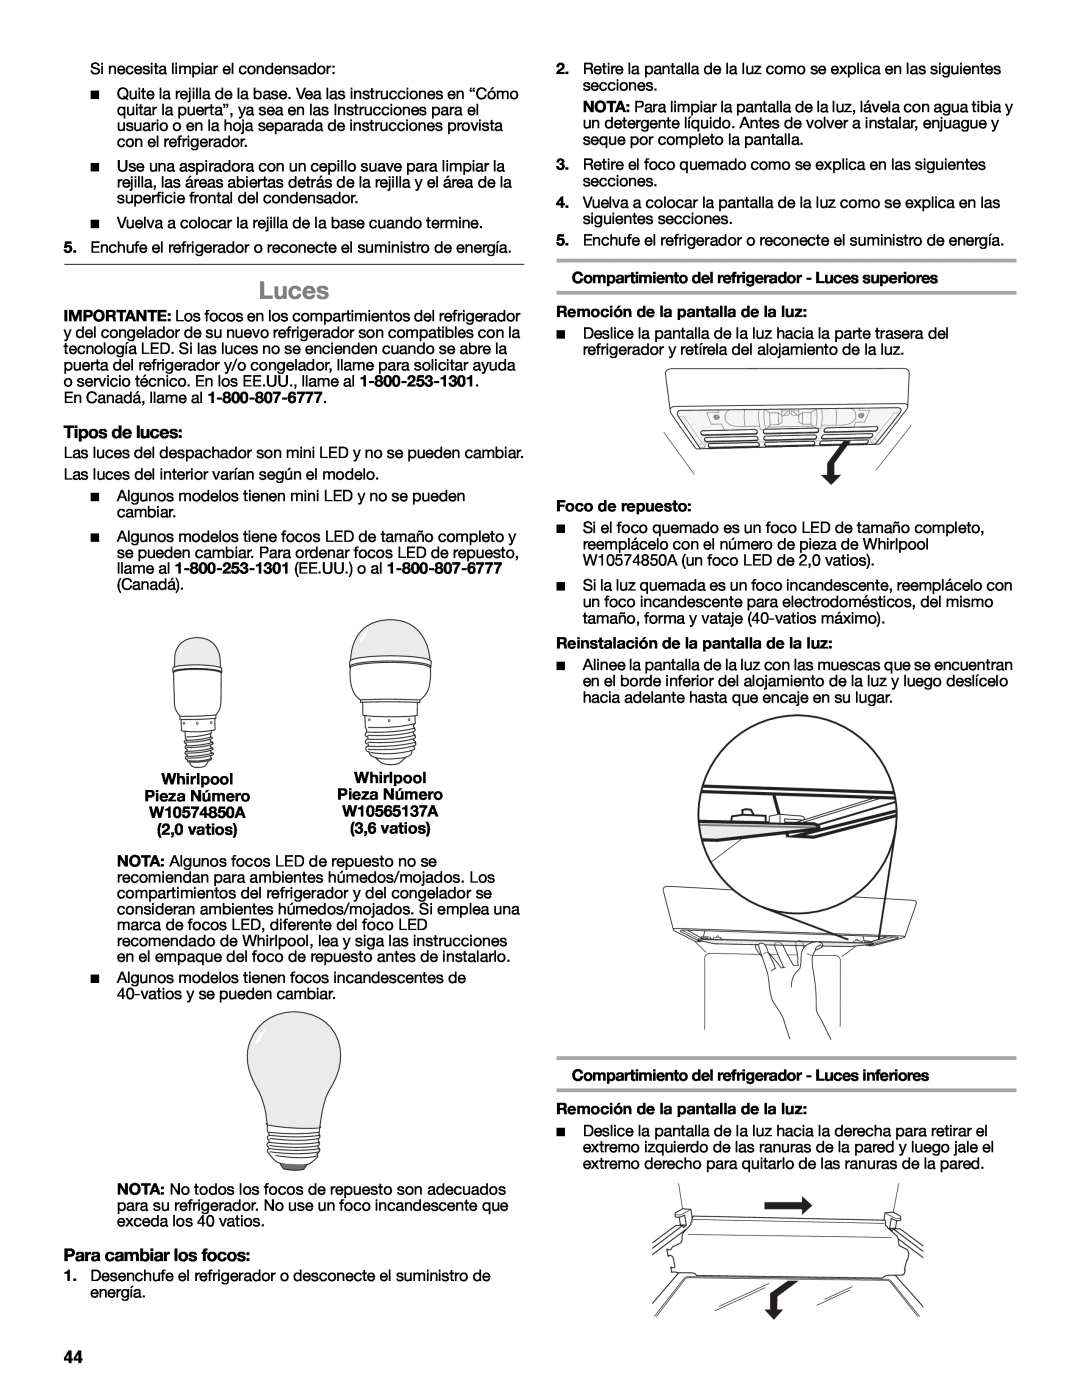 Whirlpool W10632883A installation instructions Luces, Tipos de luces, Para cambiar los focos 